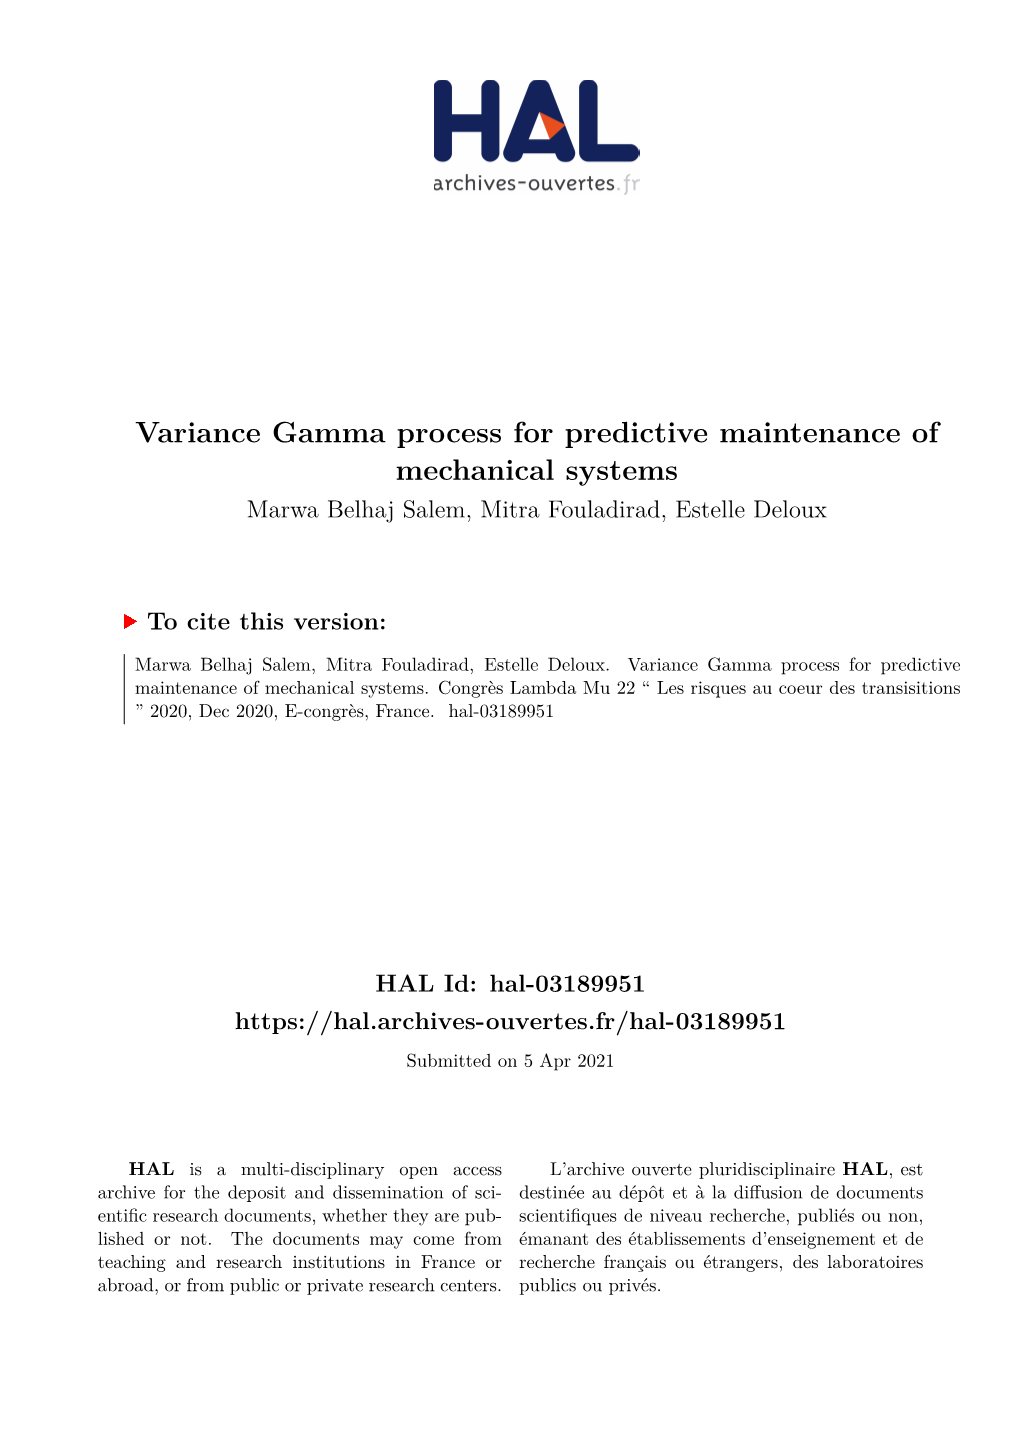 Variance Gamma Process for Predictive Maintenance of Mechanical Systems Marwa Belhaj Salem, Mitra Fouladirad, Estelle Deloux